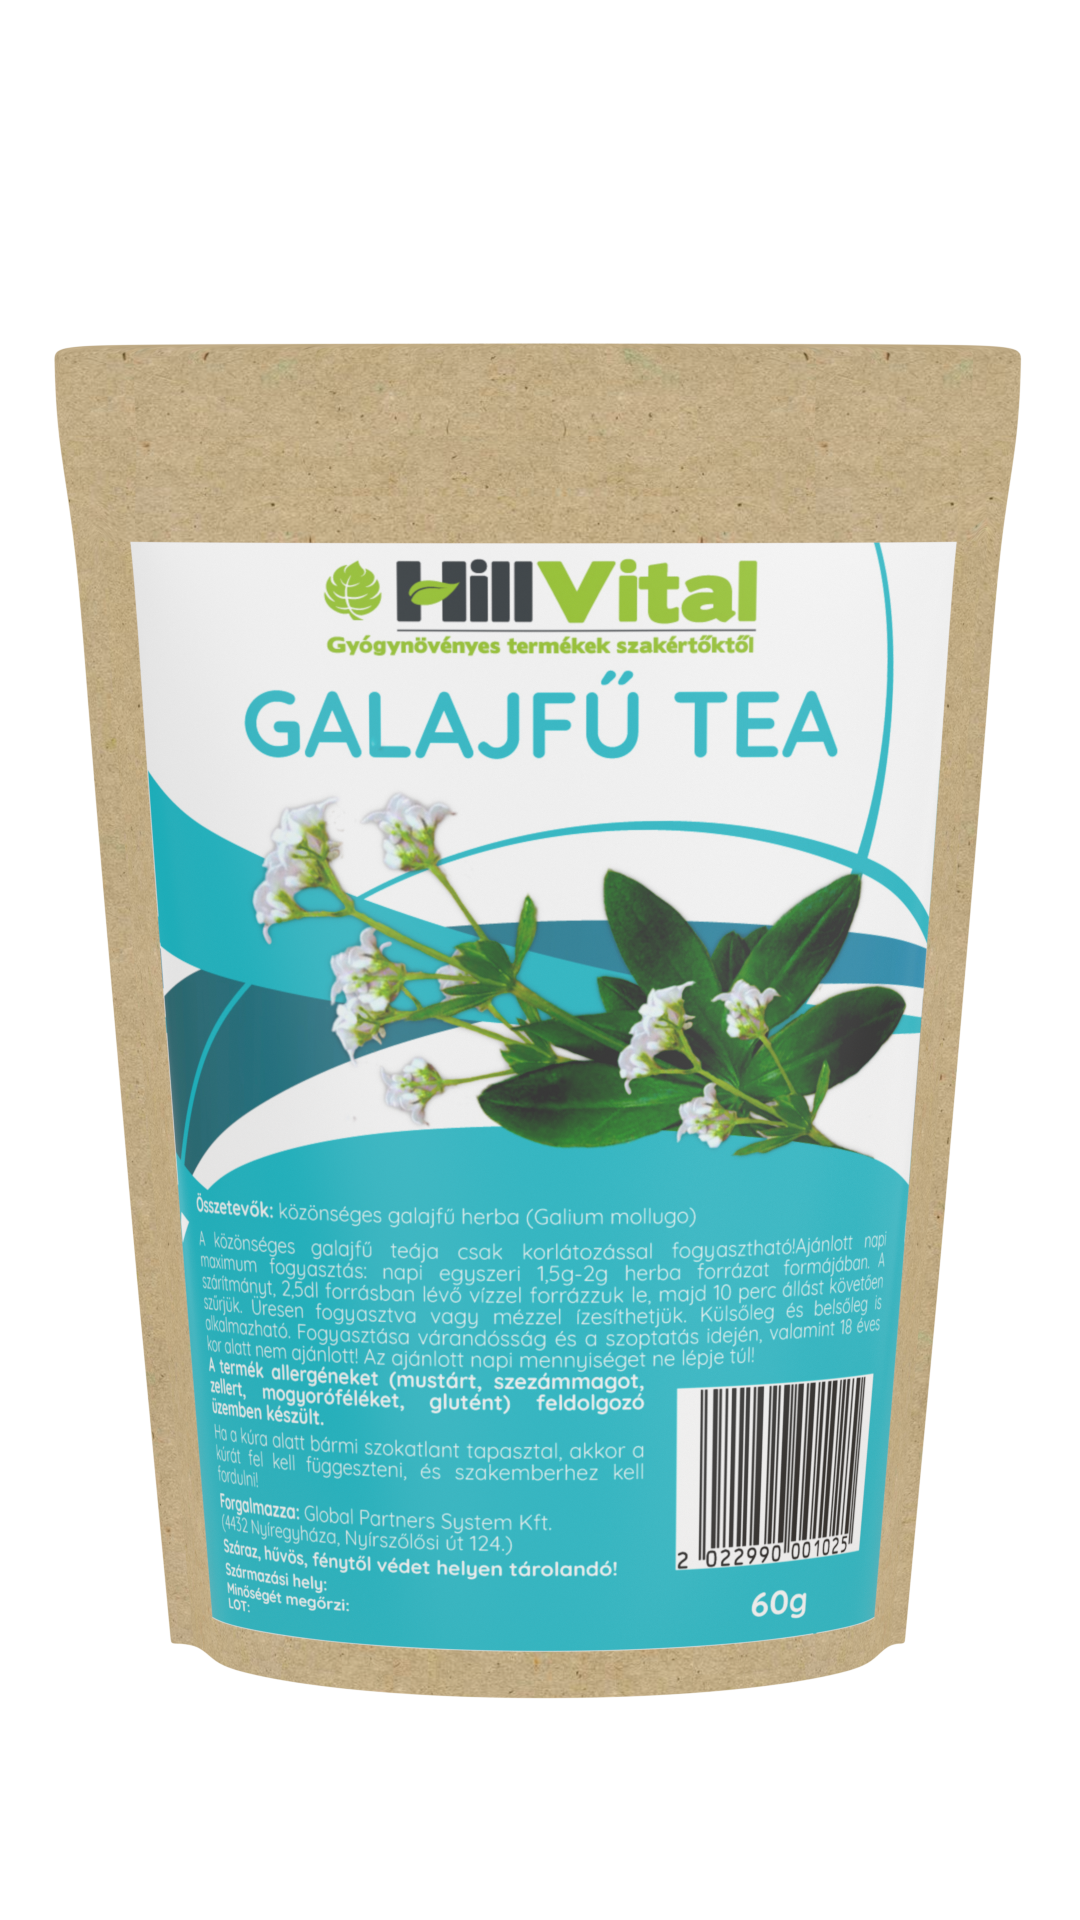 Galajfű tea